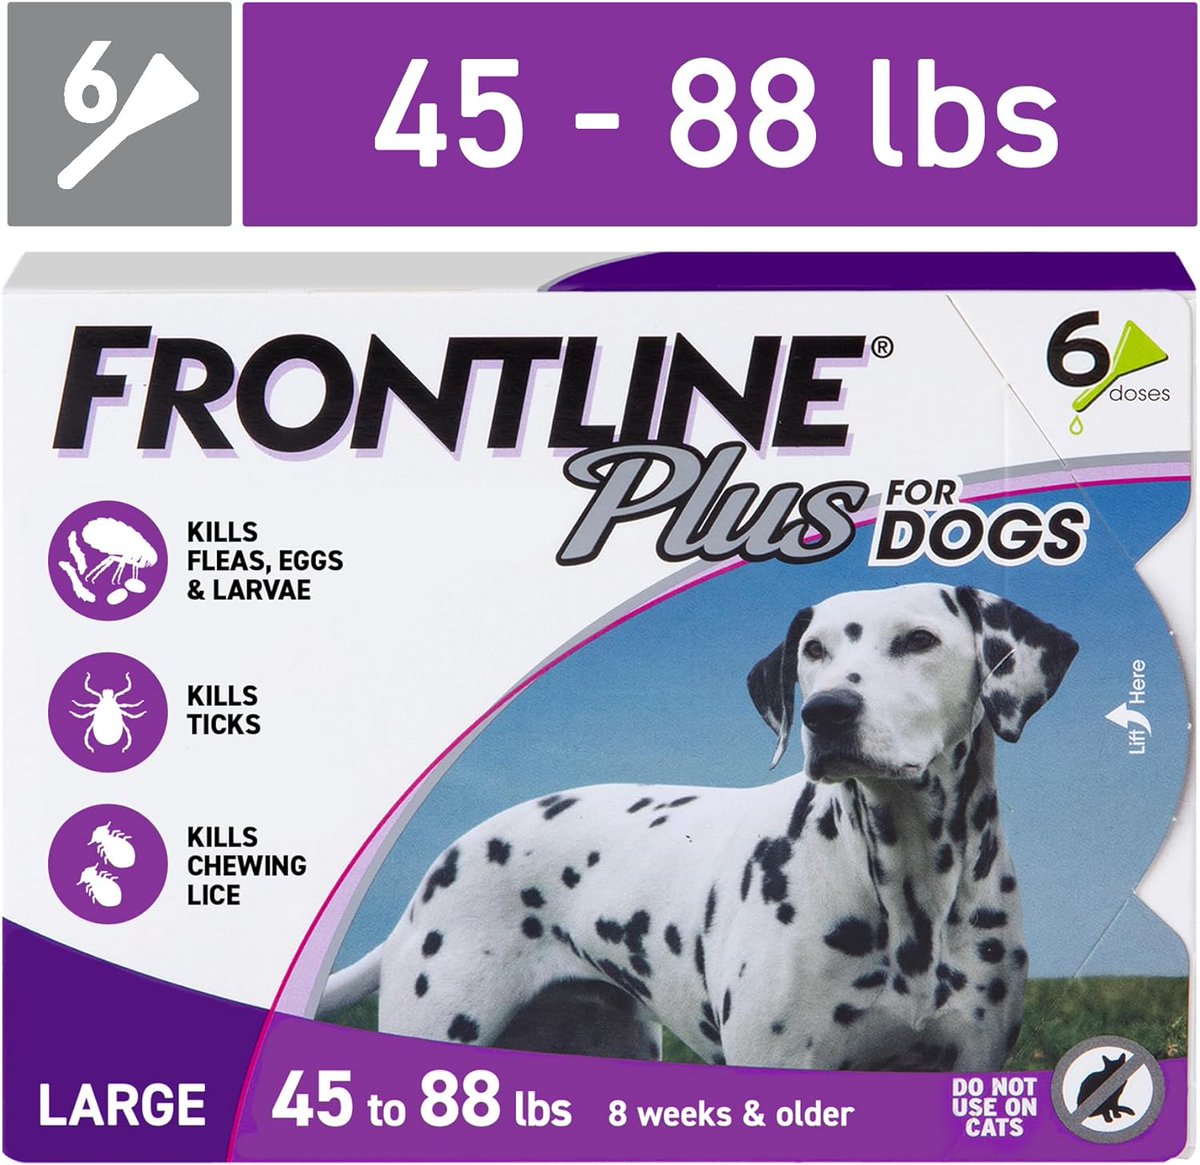 Save up to 40% on Frontline Plus Flea and Tick -- FROM $30.02 amzn.to/3Qyjvja #frontline #frontlinedeals #frontlinedeal #frontlineplus #frontlineplusfleaandtick #frontlineplusfleas #fleamedication #fleas #flea #ticks #tick #petdeals #petsupplies #petdeal #dogs #deals